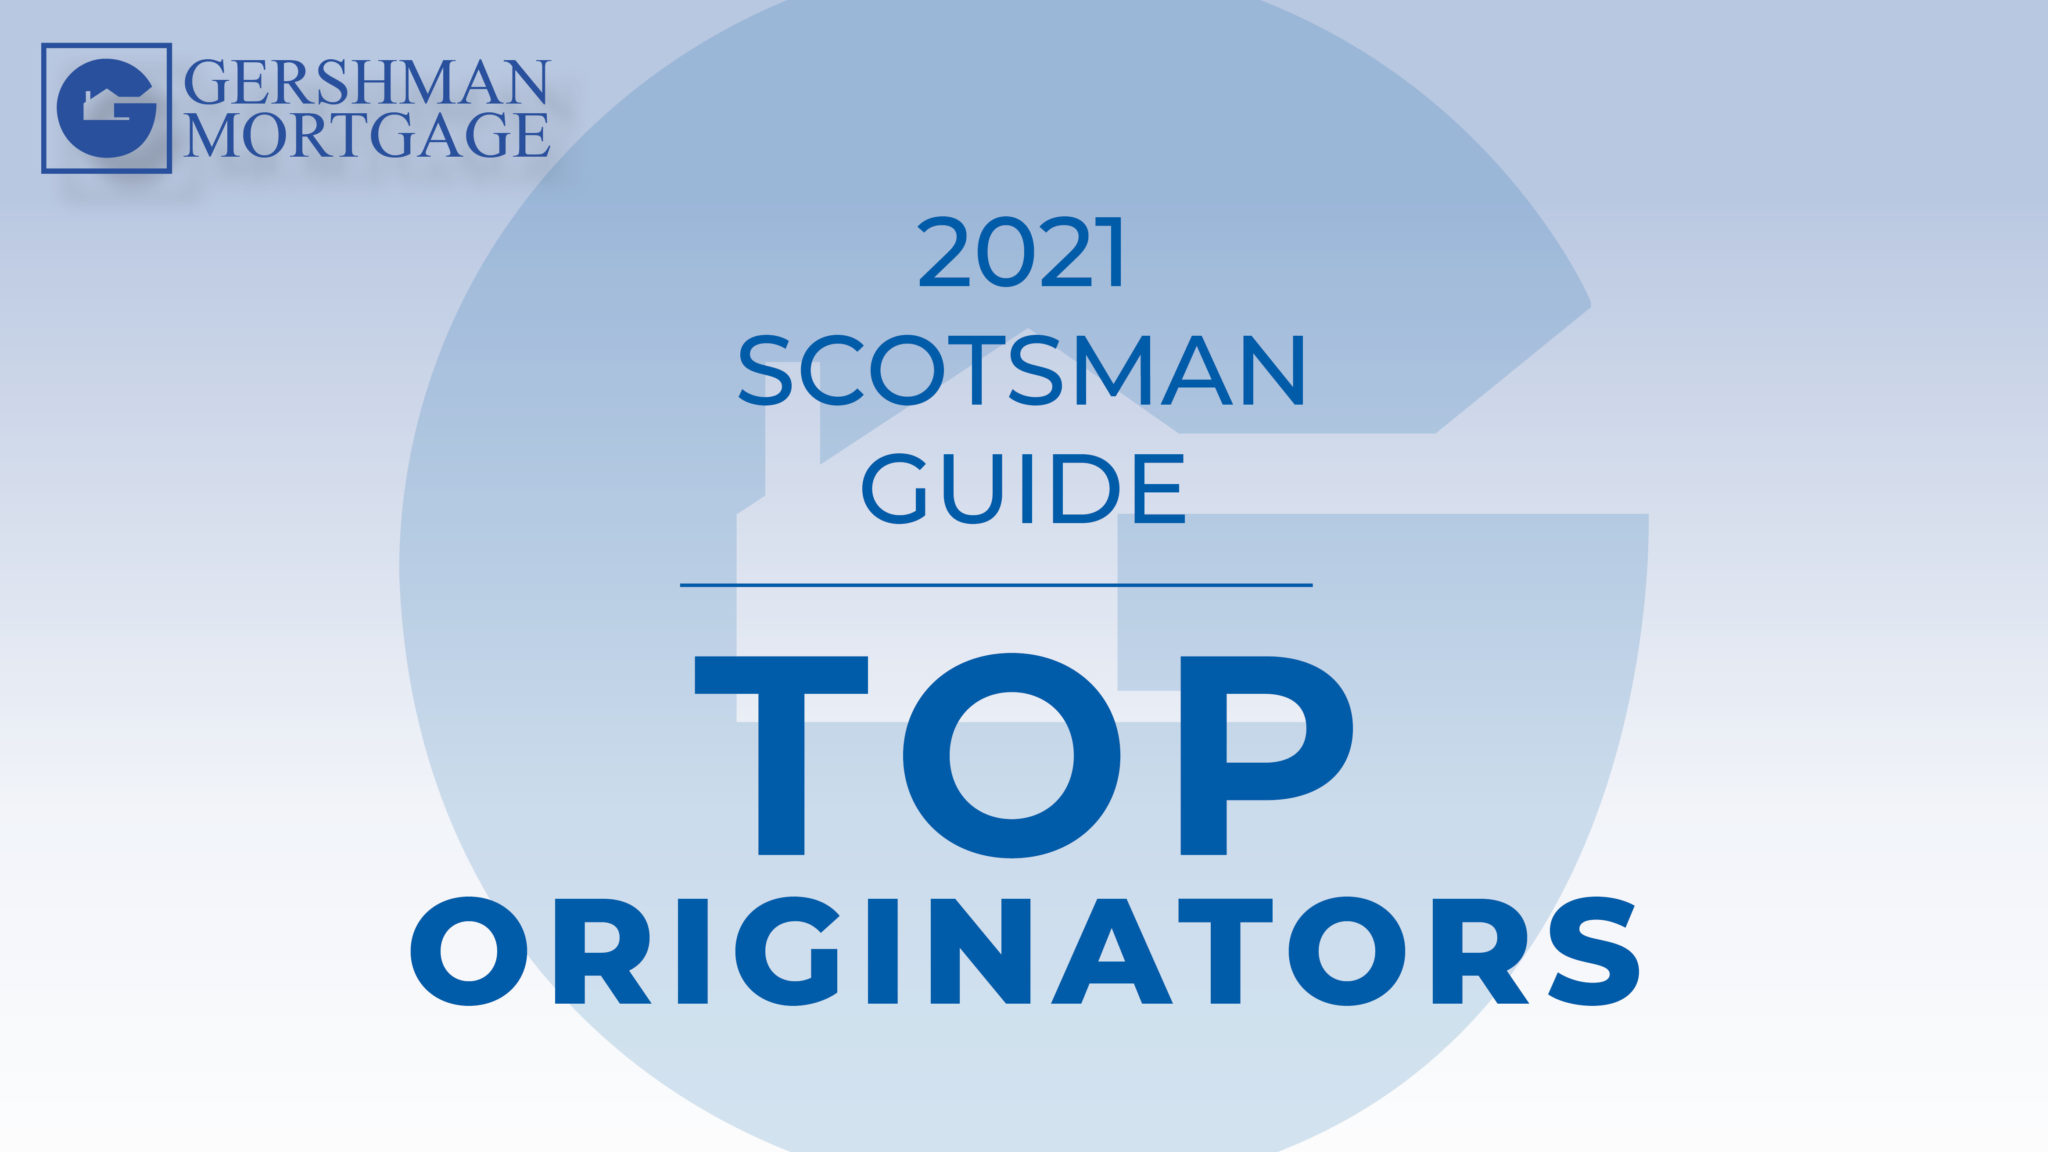 Congratulations to the Scotsman Guide Top Originators Gershman Mortgage